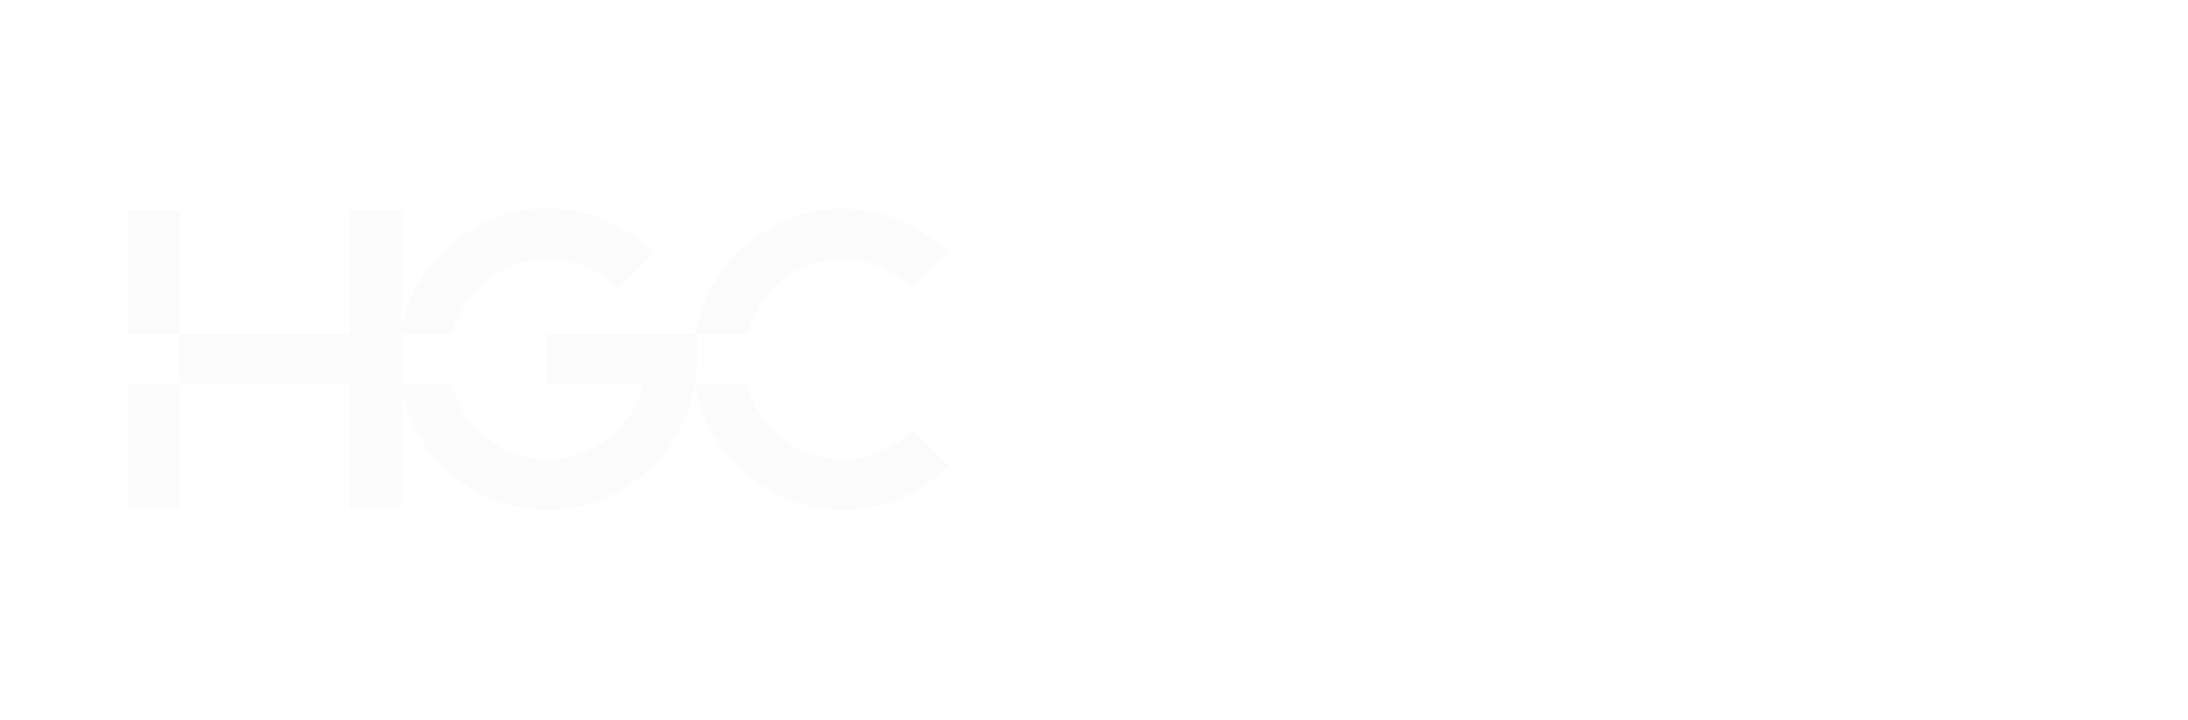 Logotipo de la empresa de comunicaciones globales Hgc sobre fondo negro.